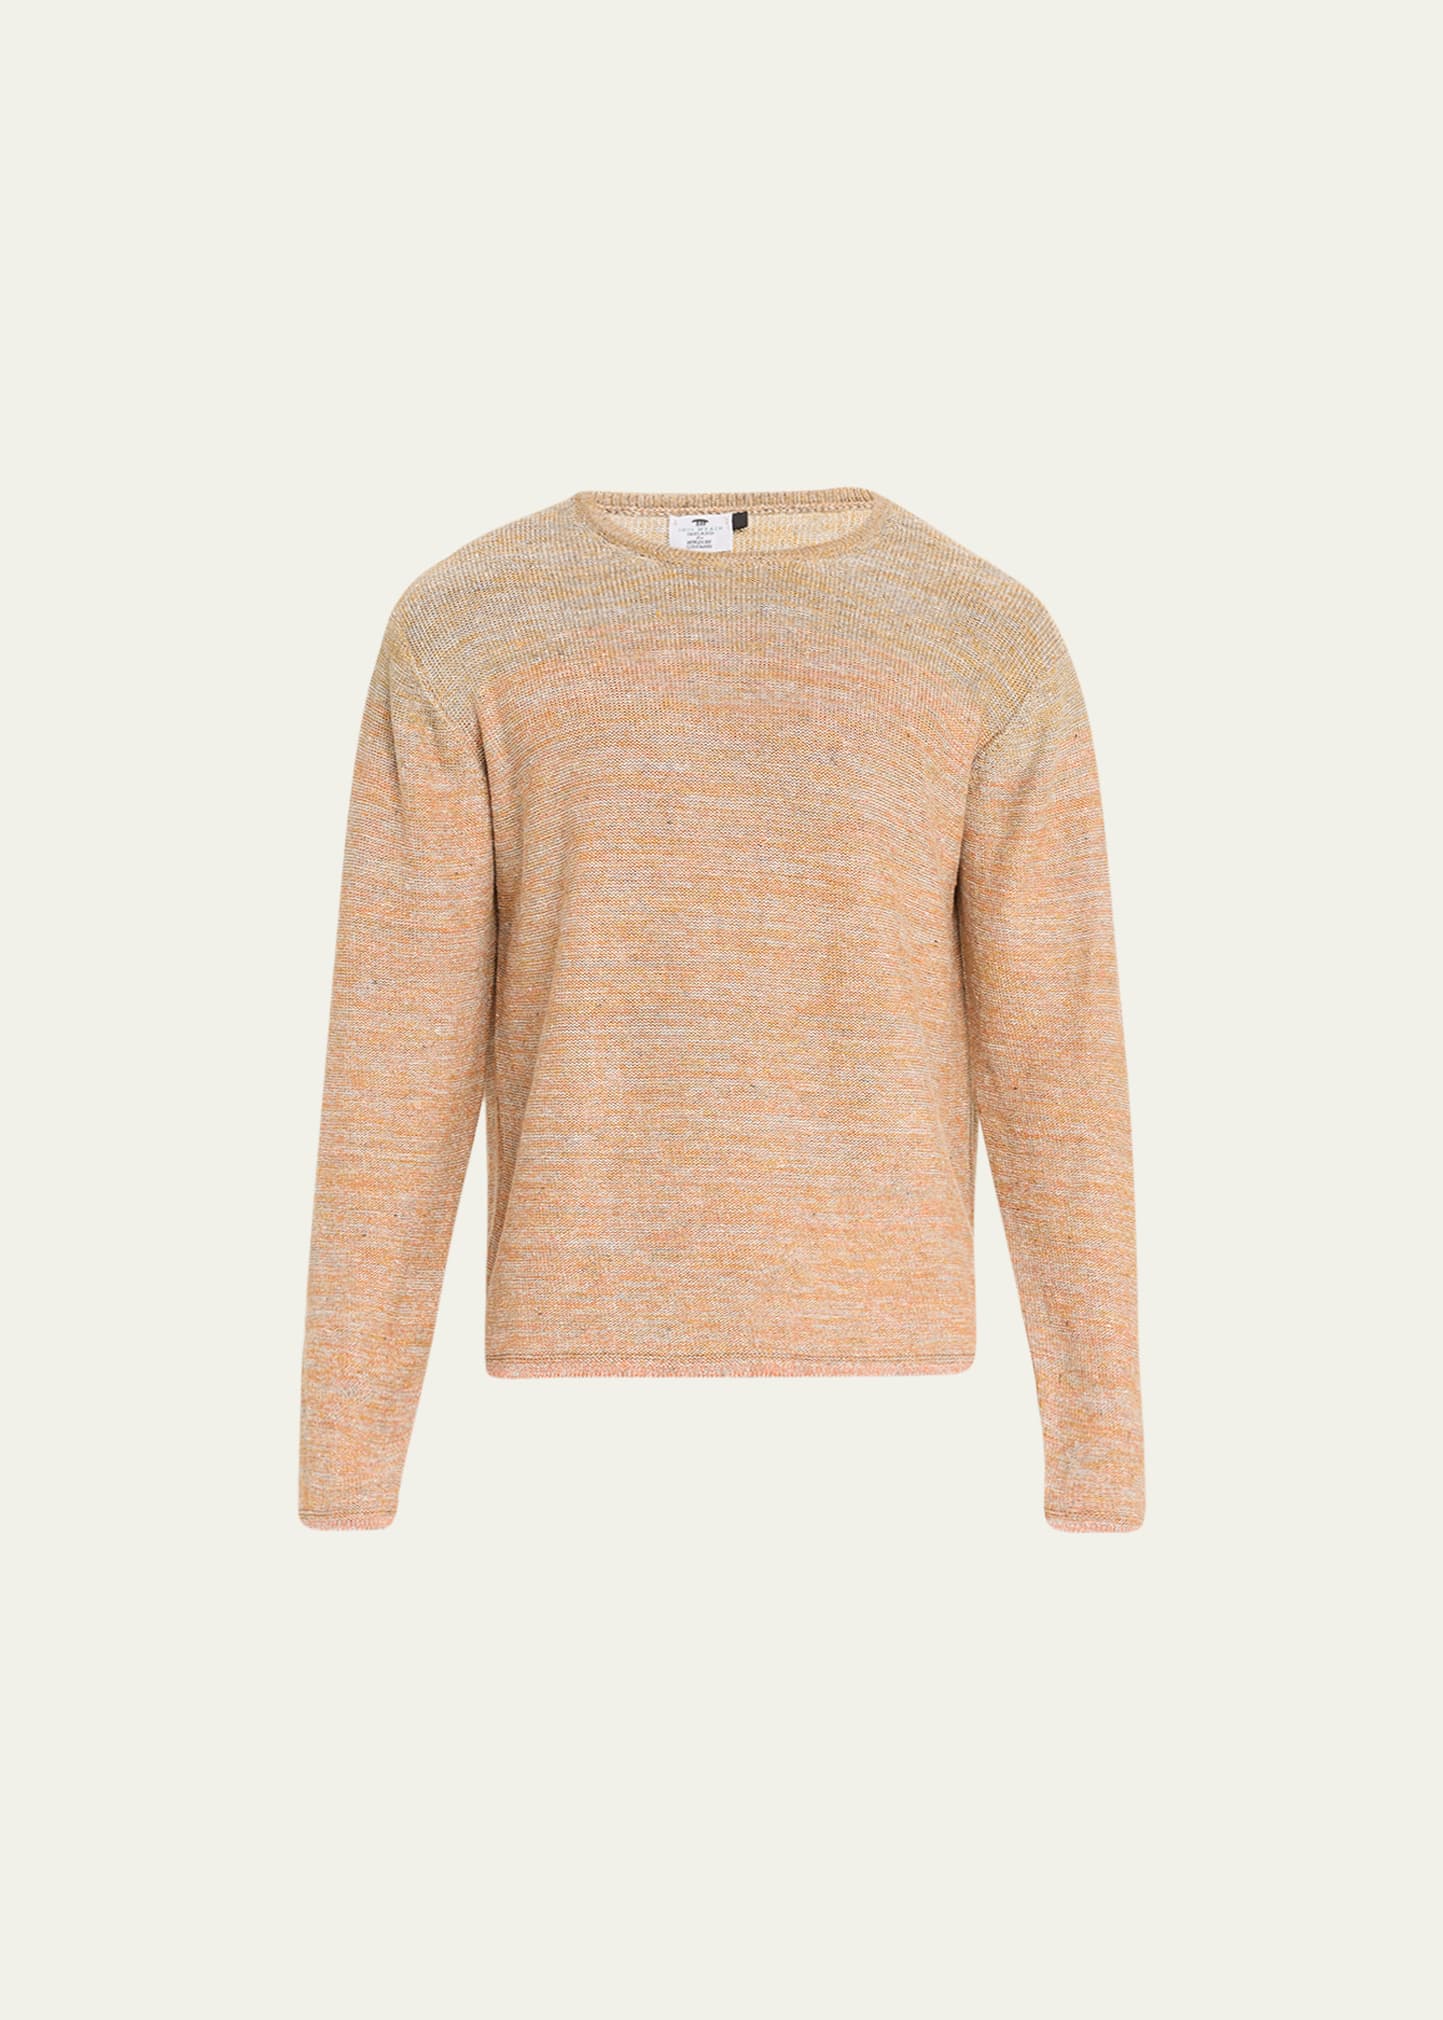 Inis Meain Men's Linen Ombre Crewneck Sweater In Orange Mix